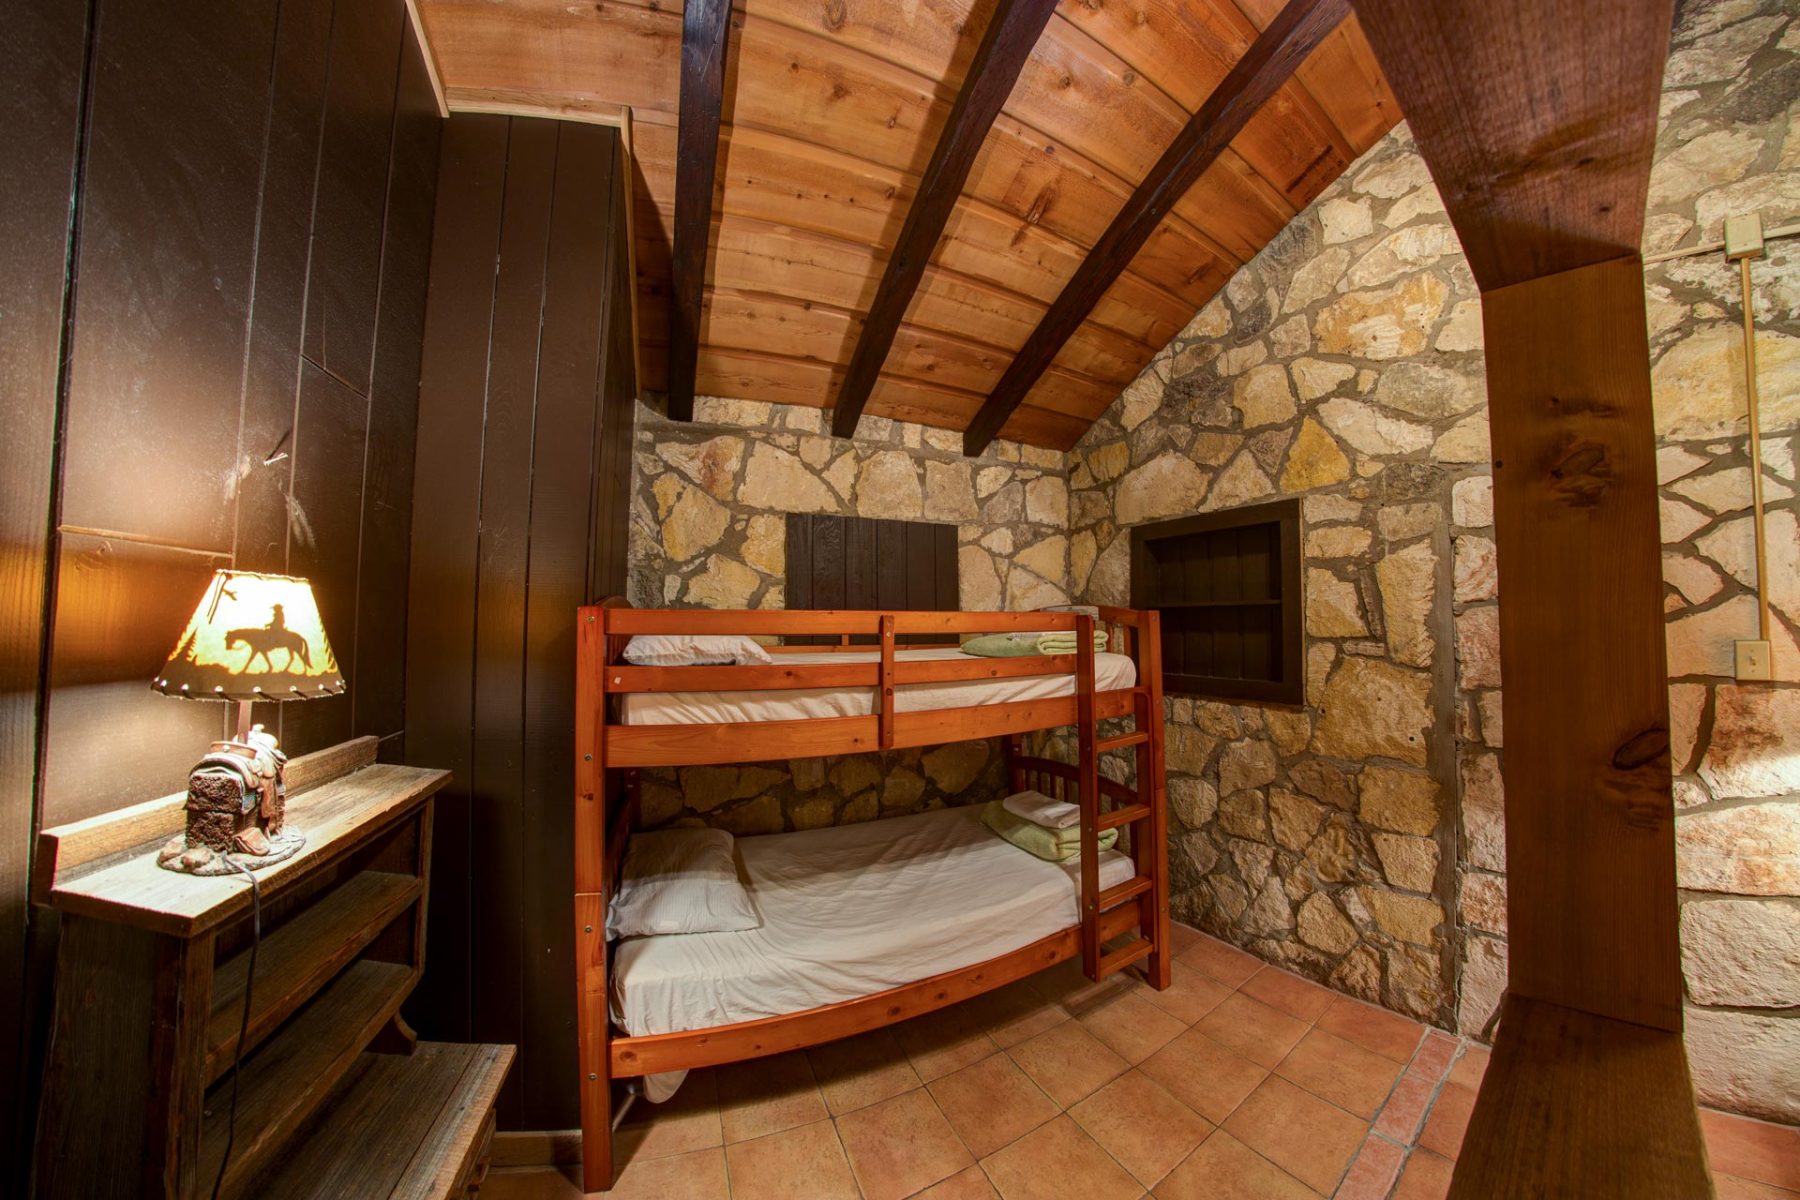 Bunk beds in cabin